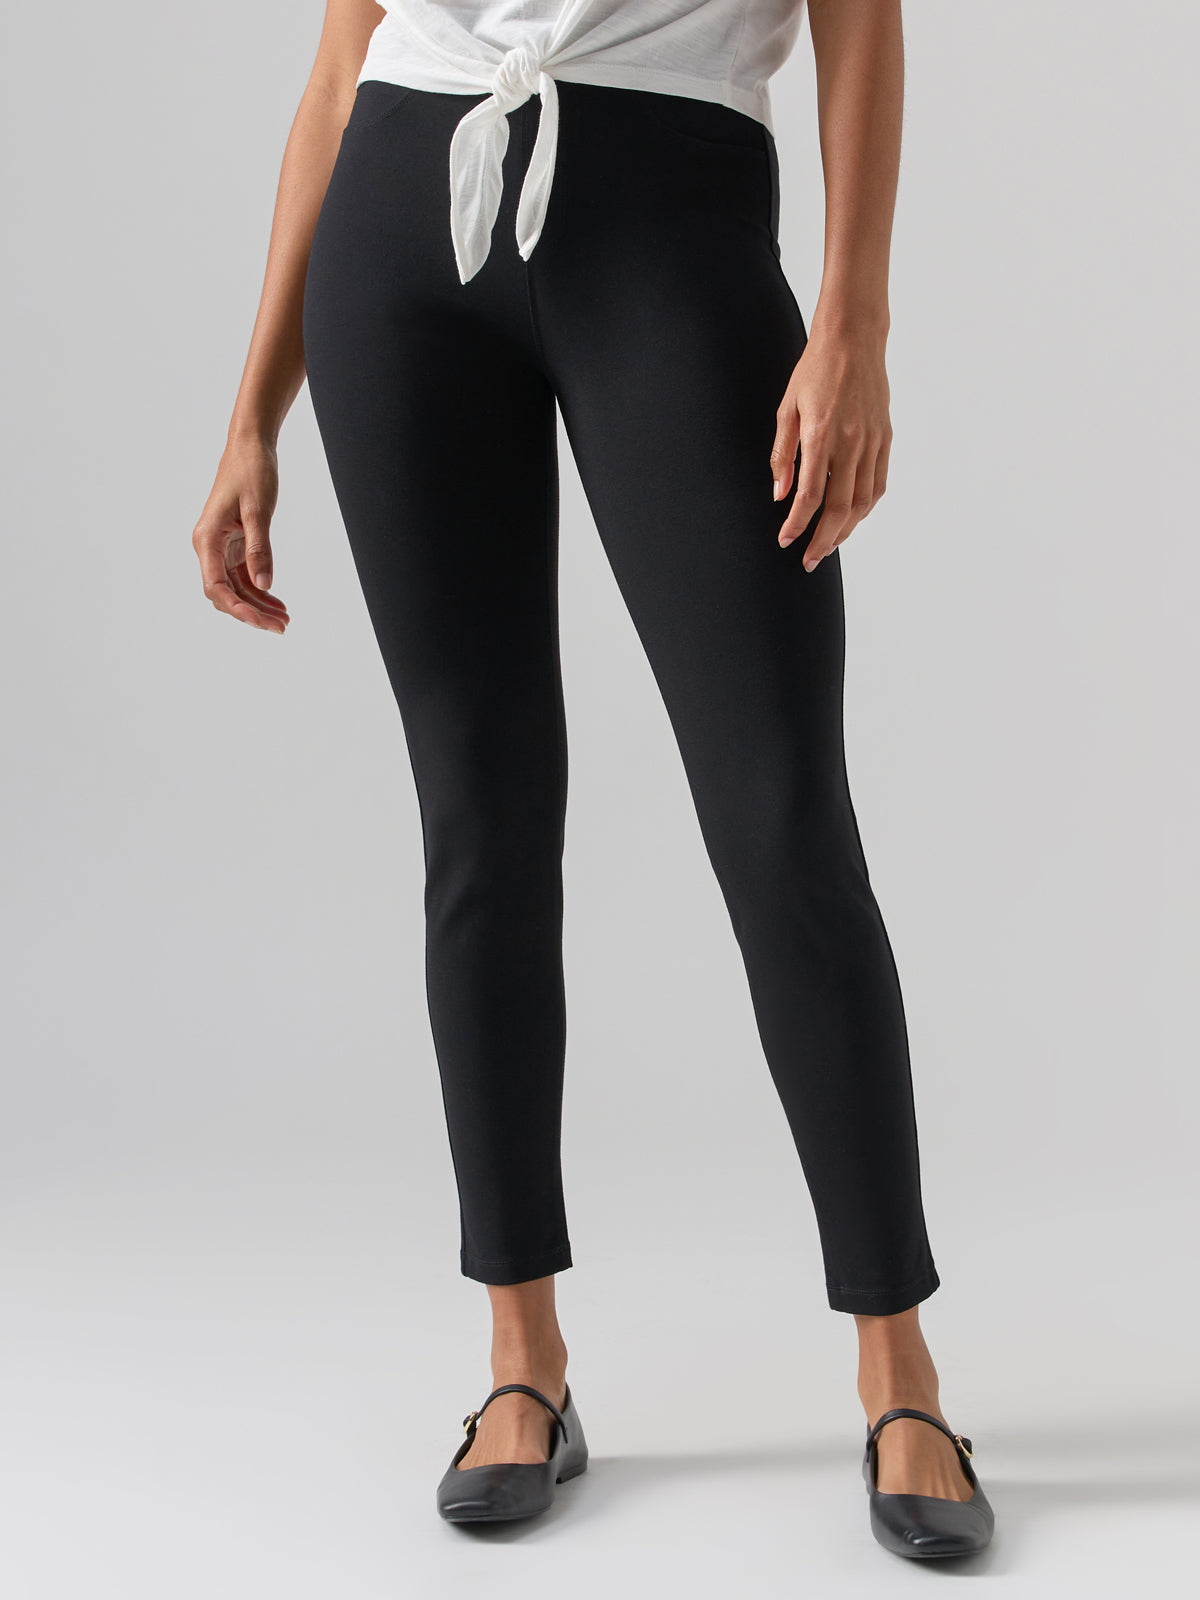 American Apparel Women's Cotton Spandex Jersey High-Waist Leggings, Black,  Small